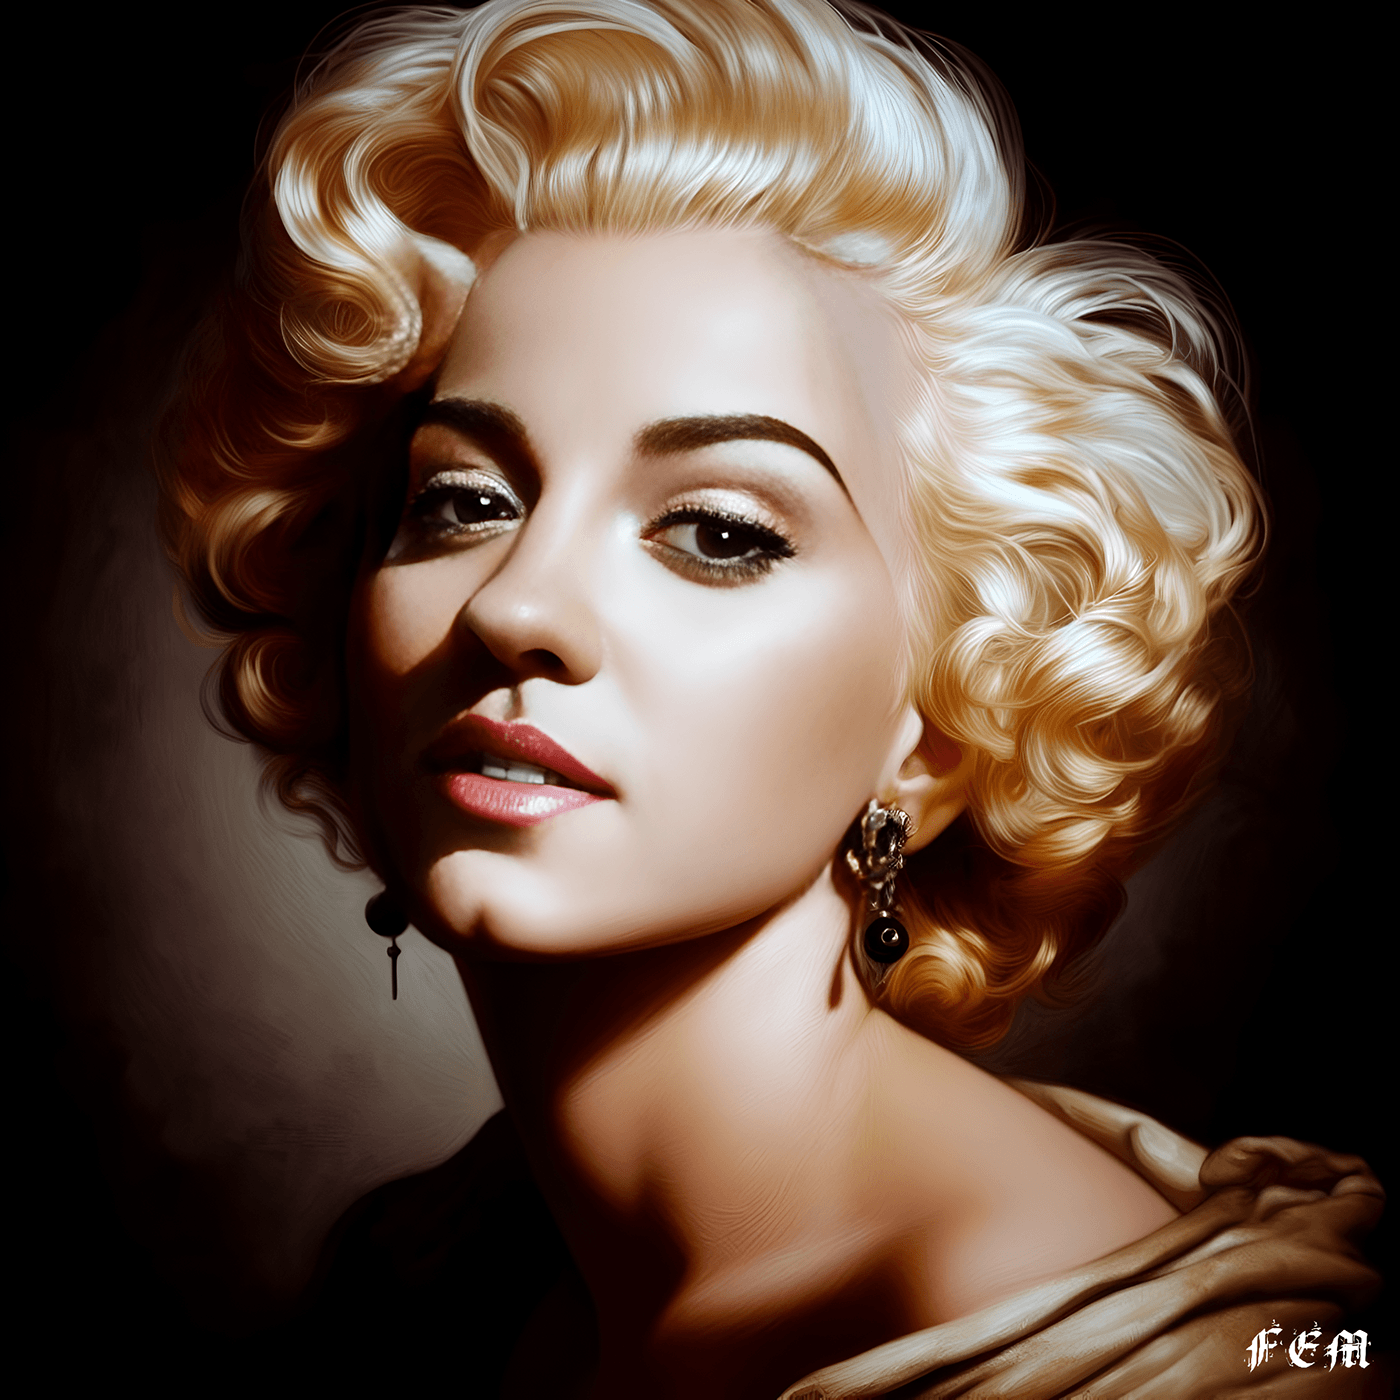 portraits beauty woman cleopatra Marilyn Monroe harley quinn fanart artwork Character design  concept art